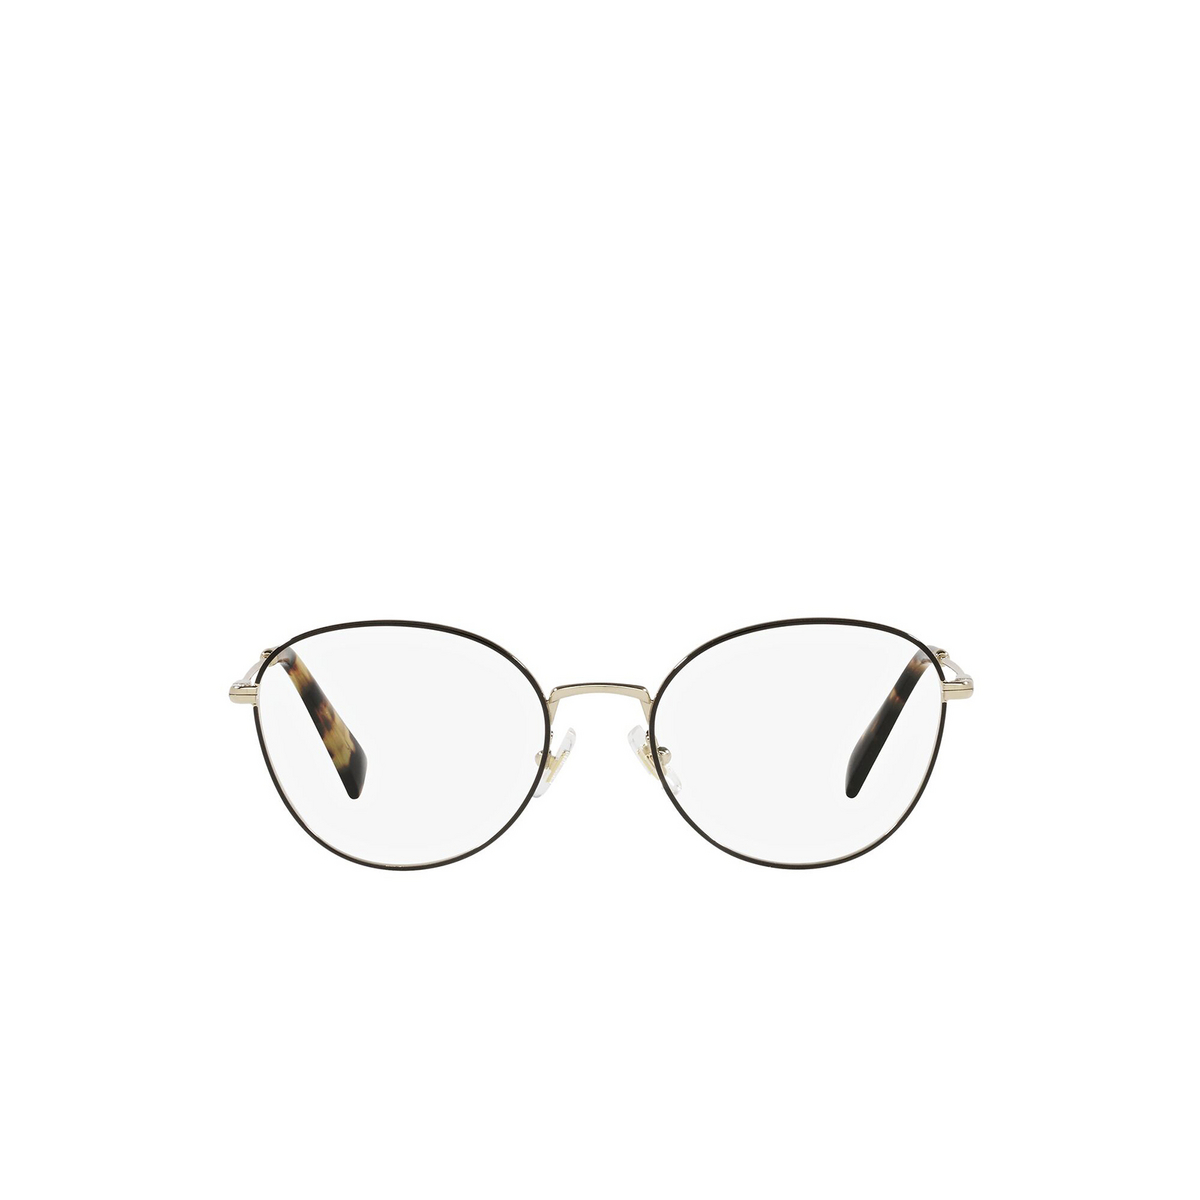 Miu Miu® Cat-eye Eyeglasses: MU 50UV color Black AAV1O1 - front view.